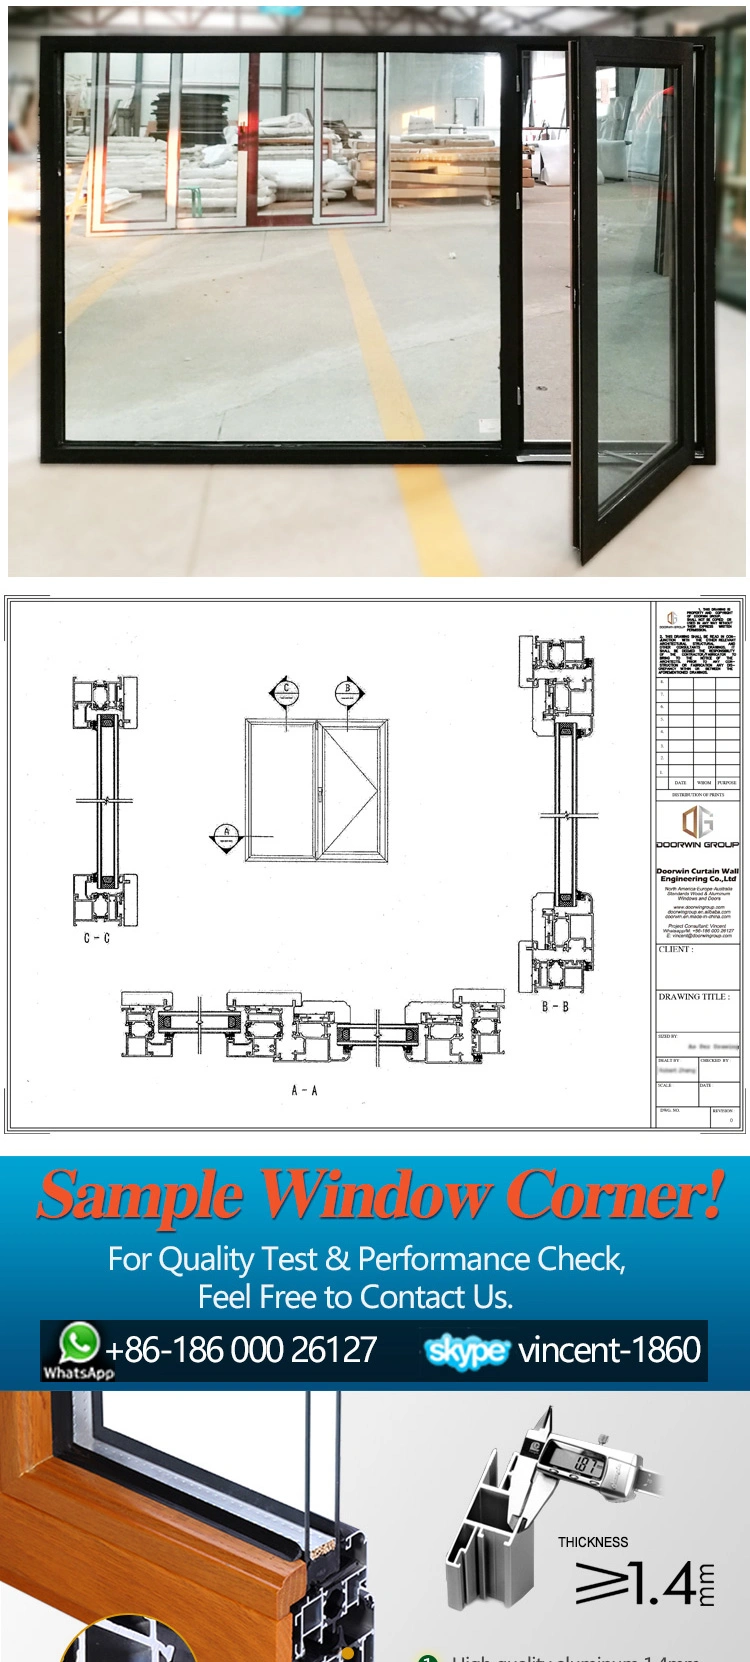 Standard American Style Wood Frame Aluminum Window, Thermal Break Aluminum with Interior Wood Cladding